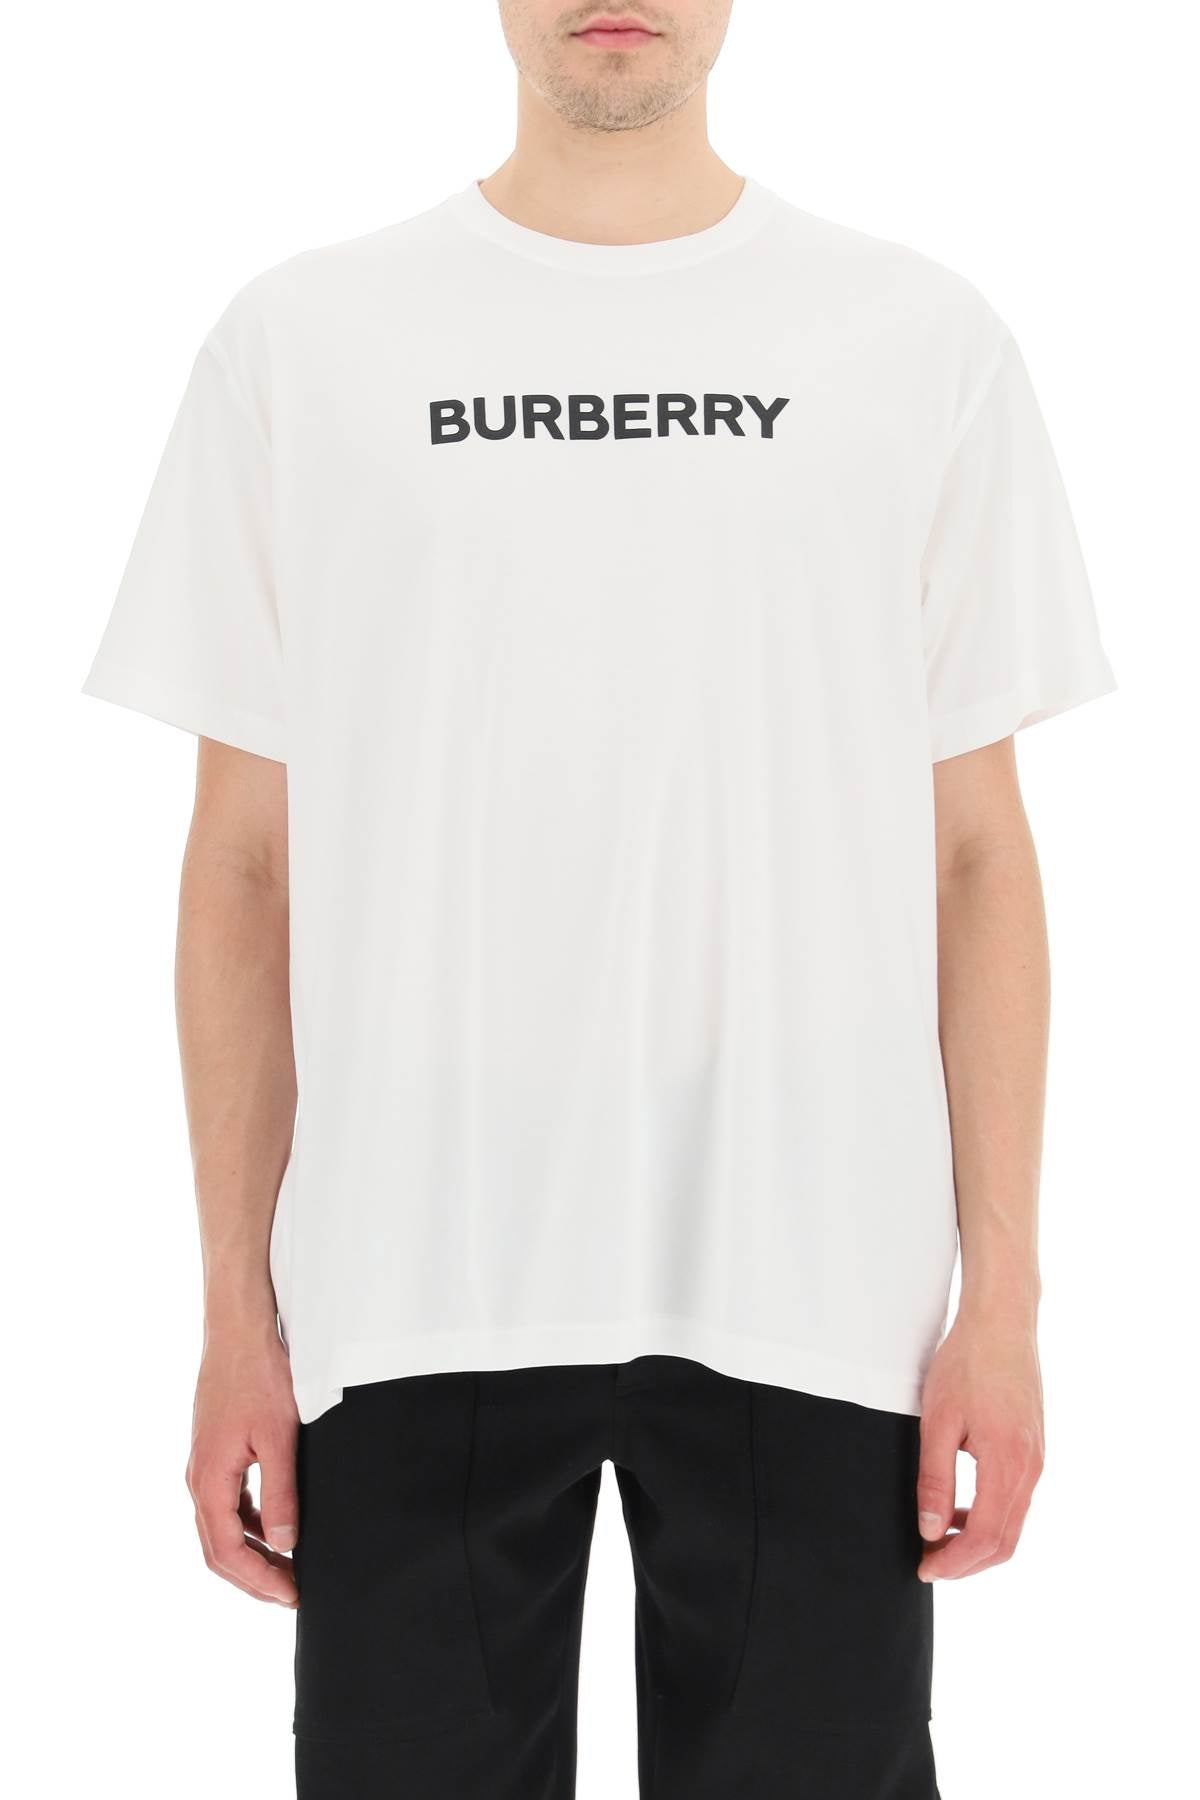 Burberry logo t-shirt